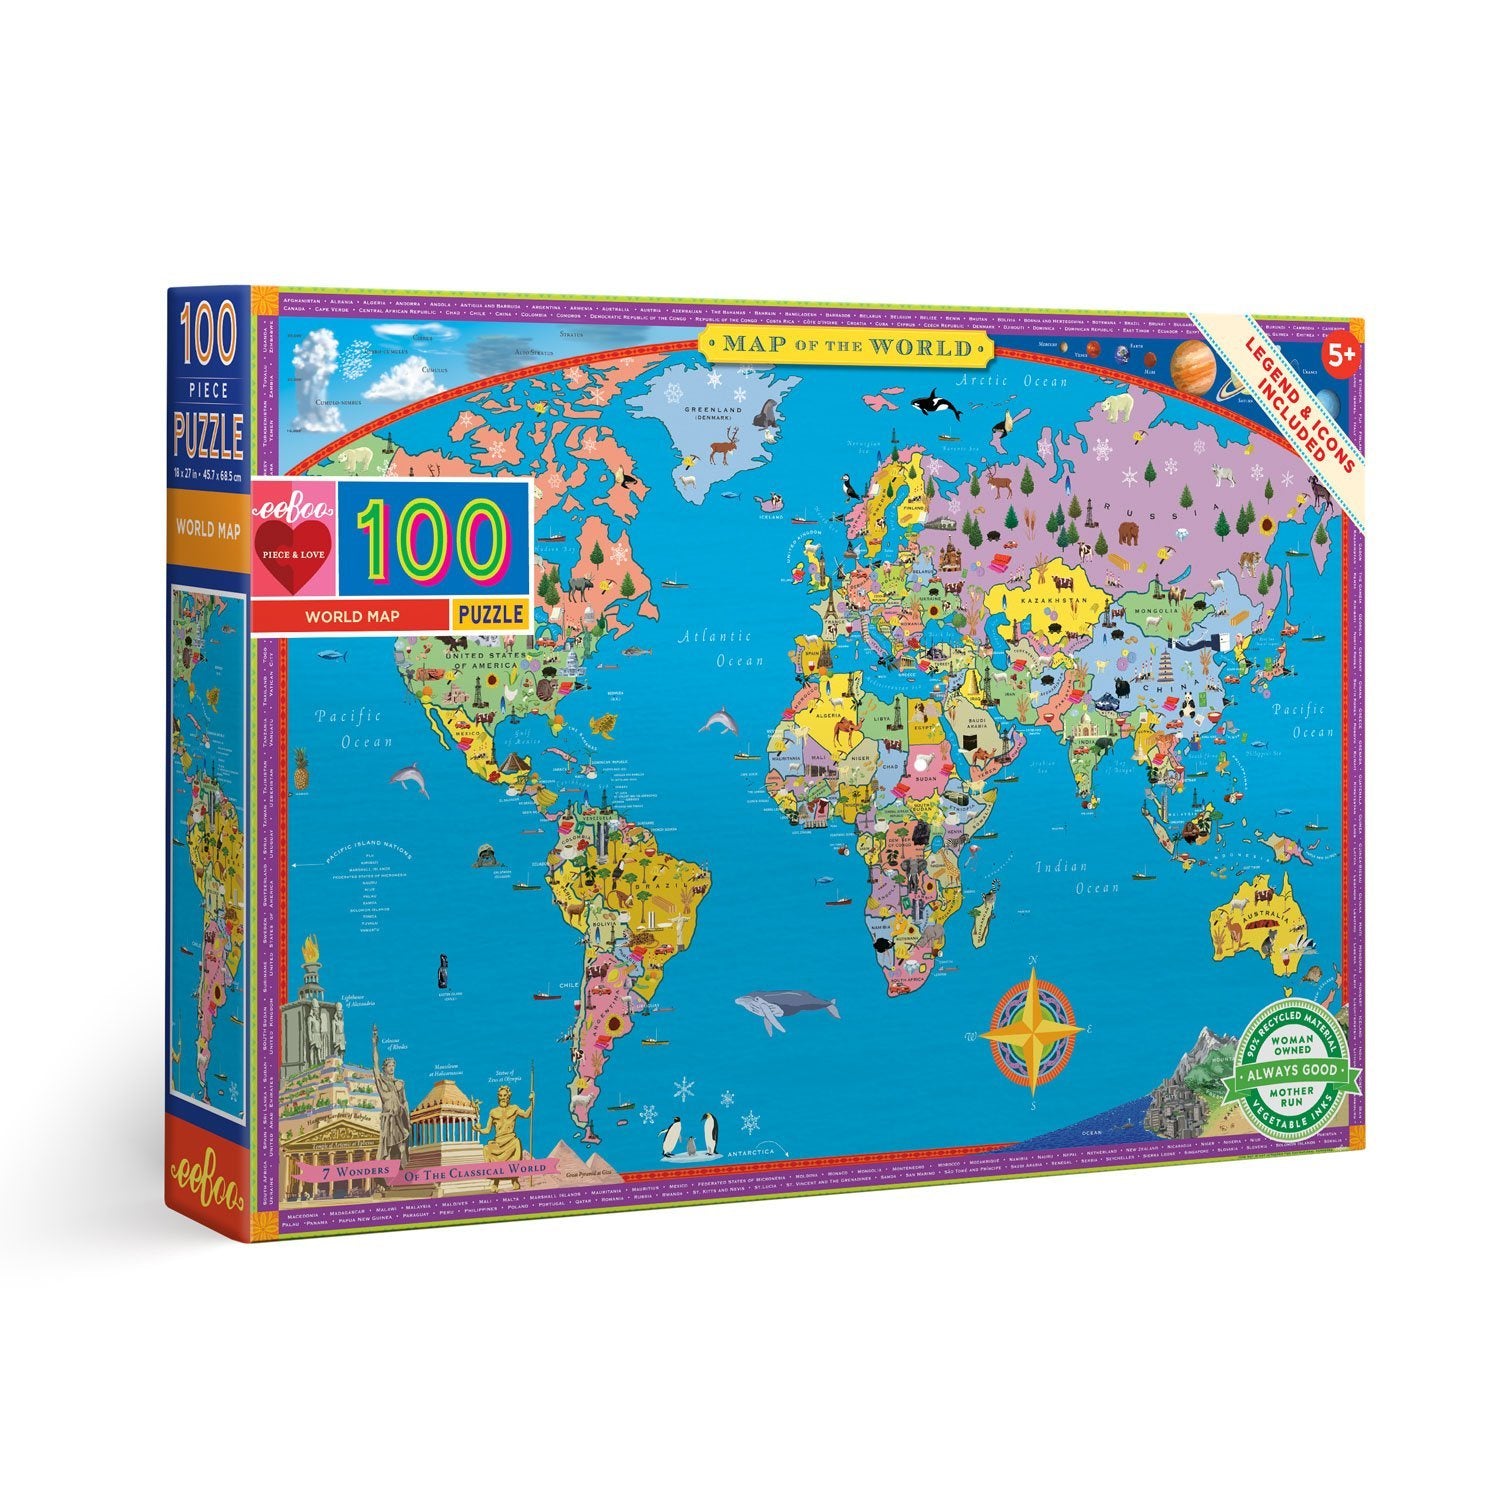 100 Piece Puzzle - World Map